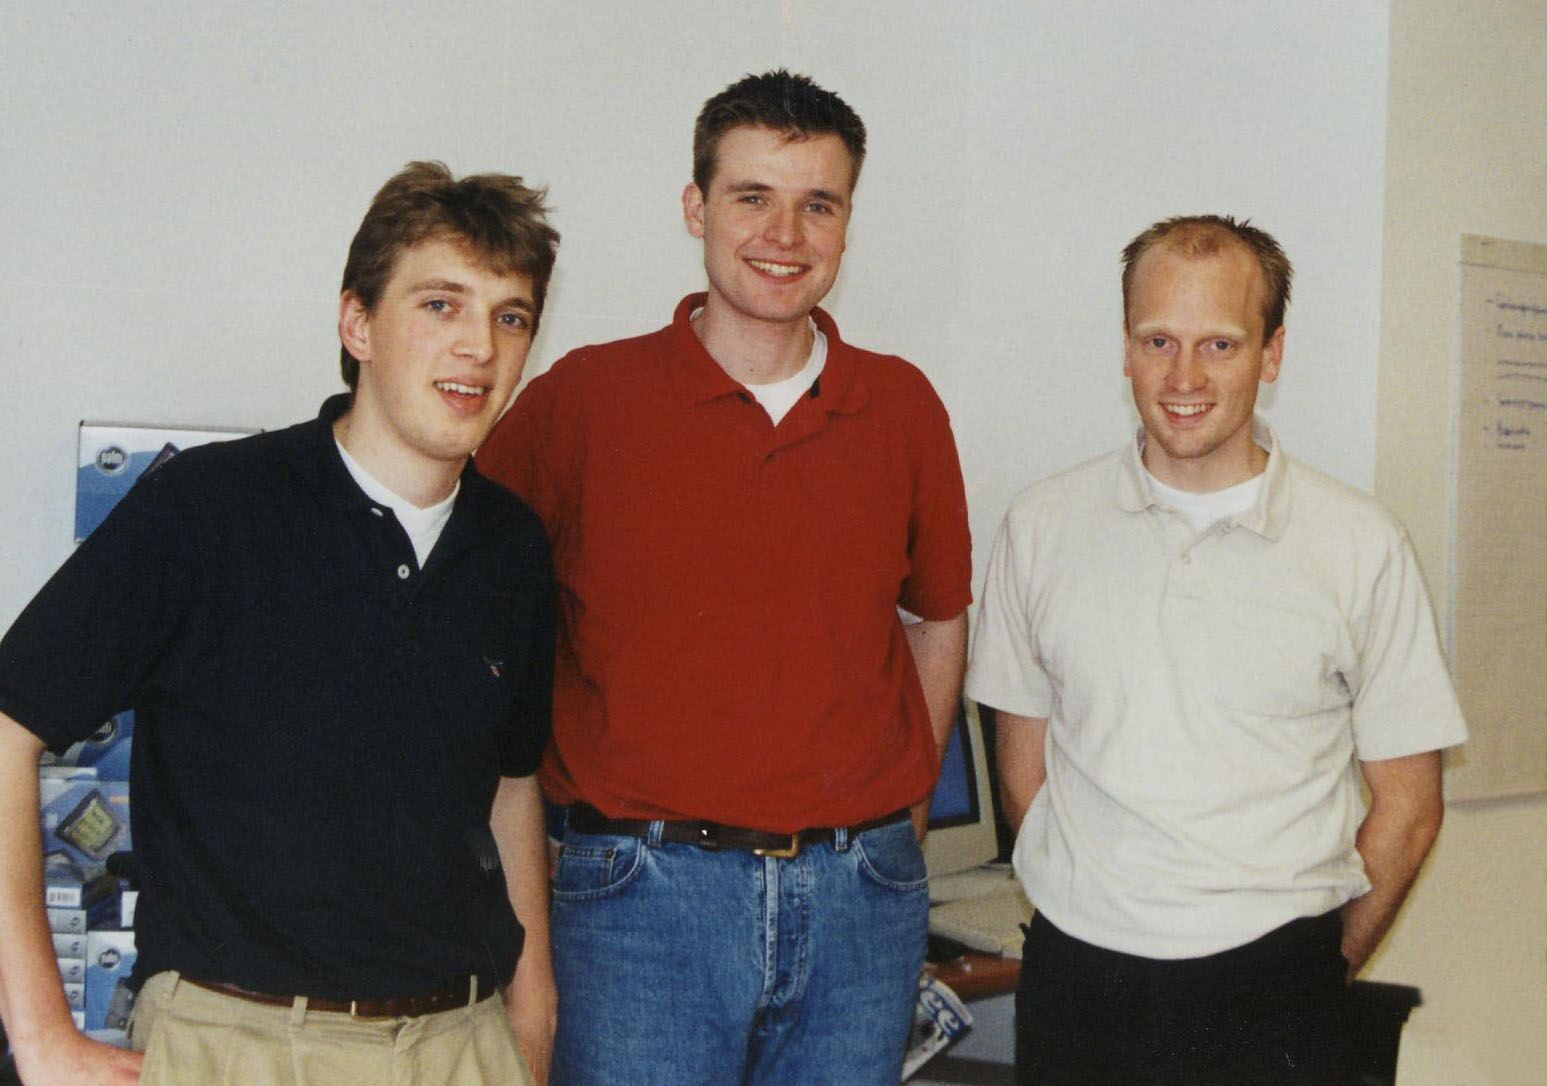 Foto: Coolblue-oprichters Pieter Zwart, Paul de Jong en Bart Kuipers in 2003. Bron: Coolblue